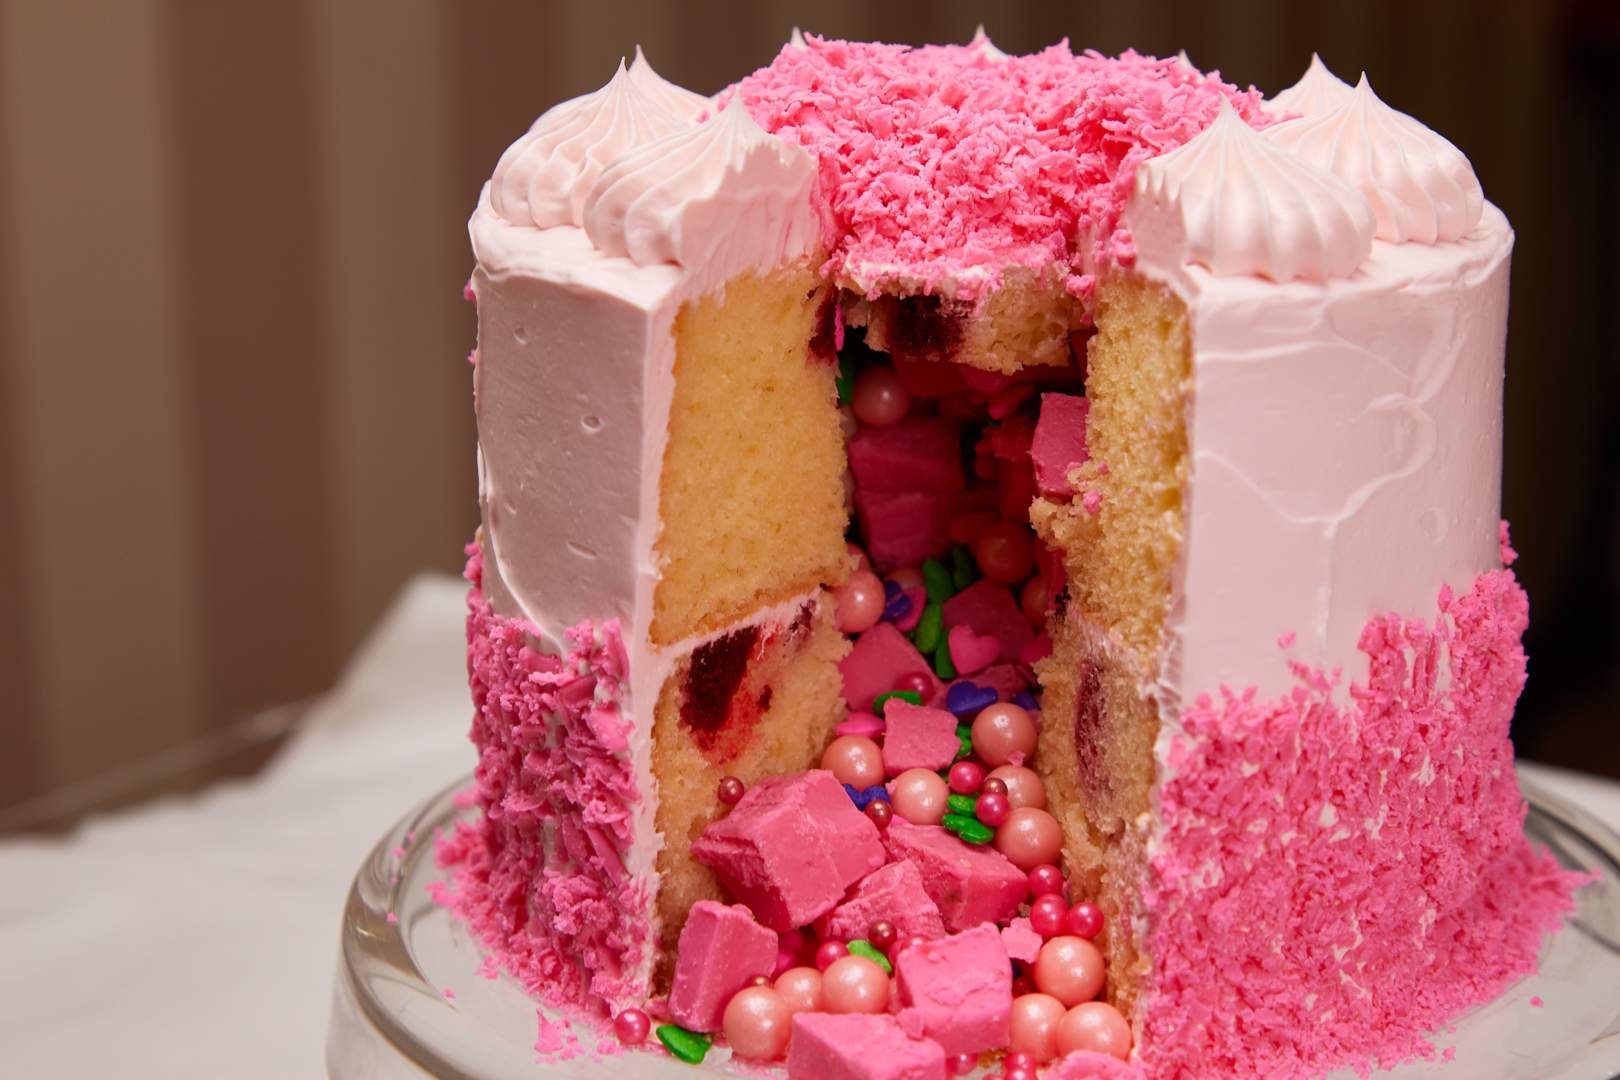 How to Make a Surprise Cake | Epicurious